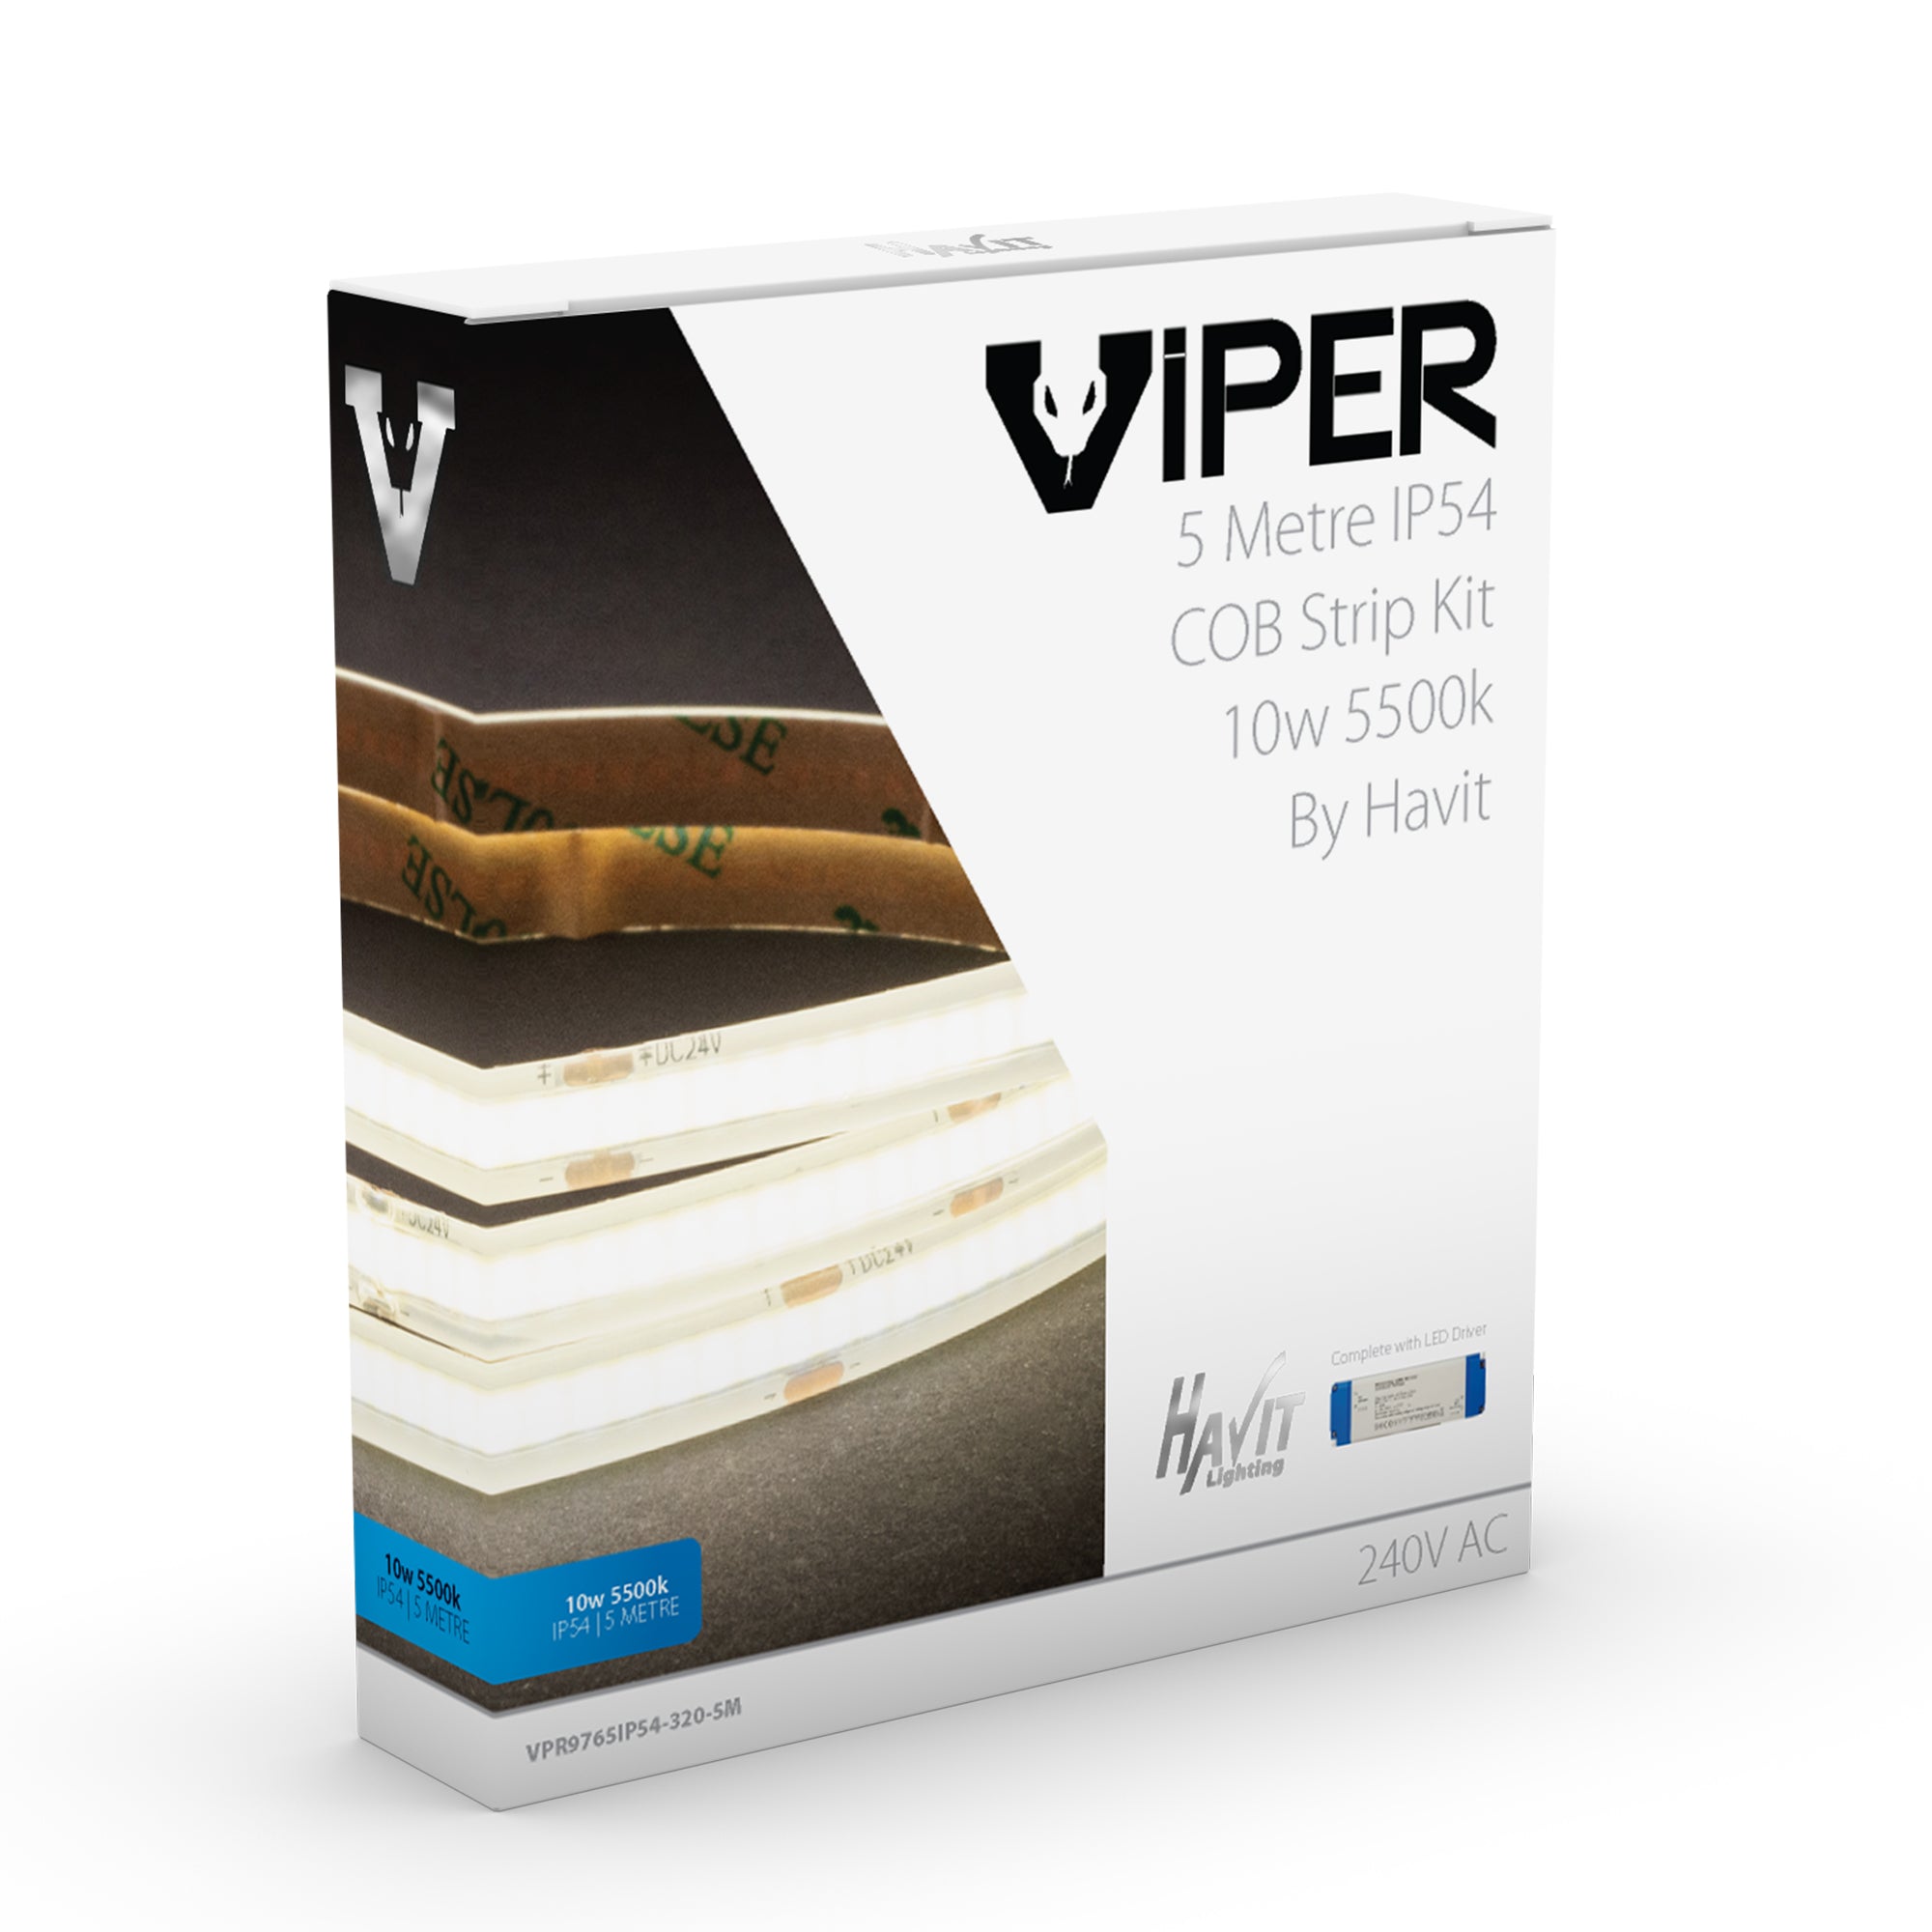 VPR9765IP54-320-5M - Viper COB 10w Per Metre 5m LED Strip kit 5500k